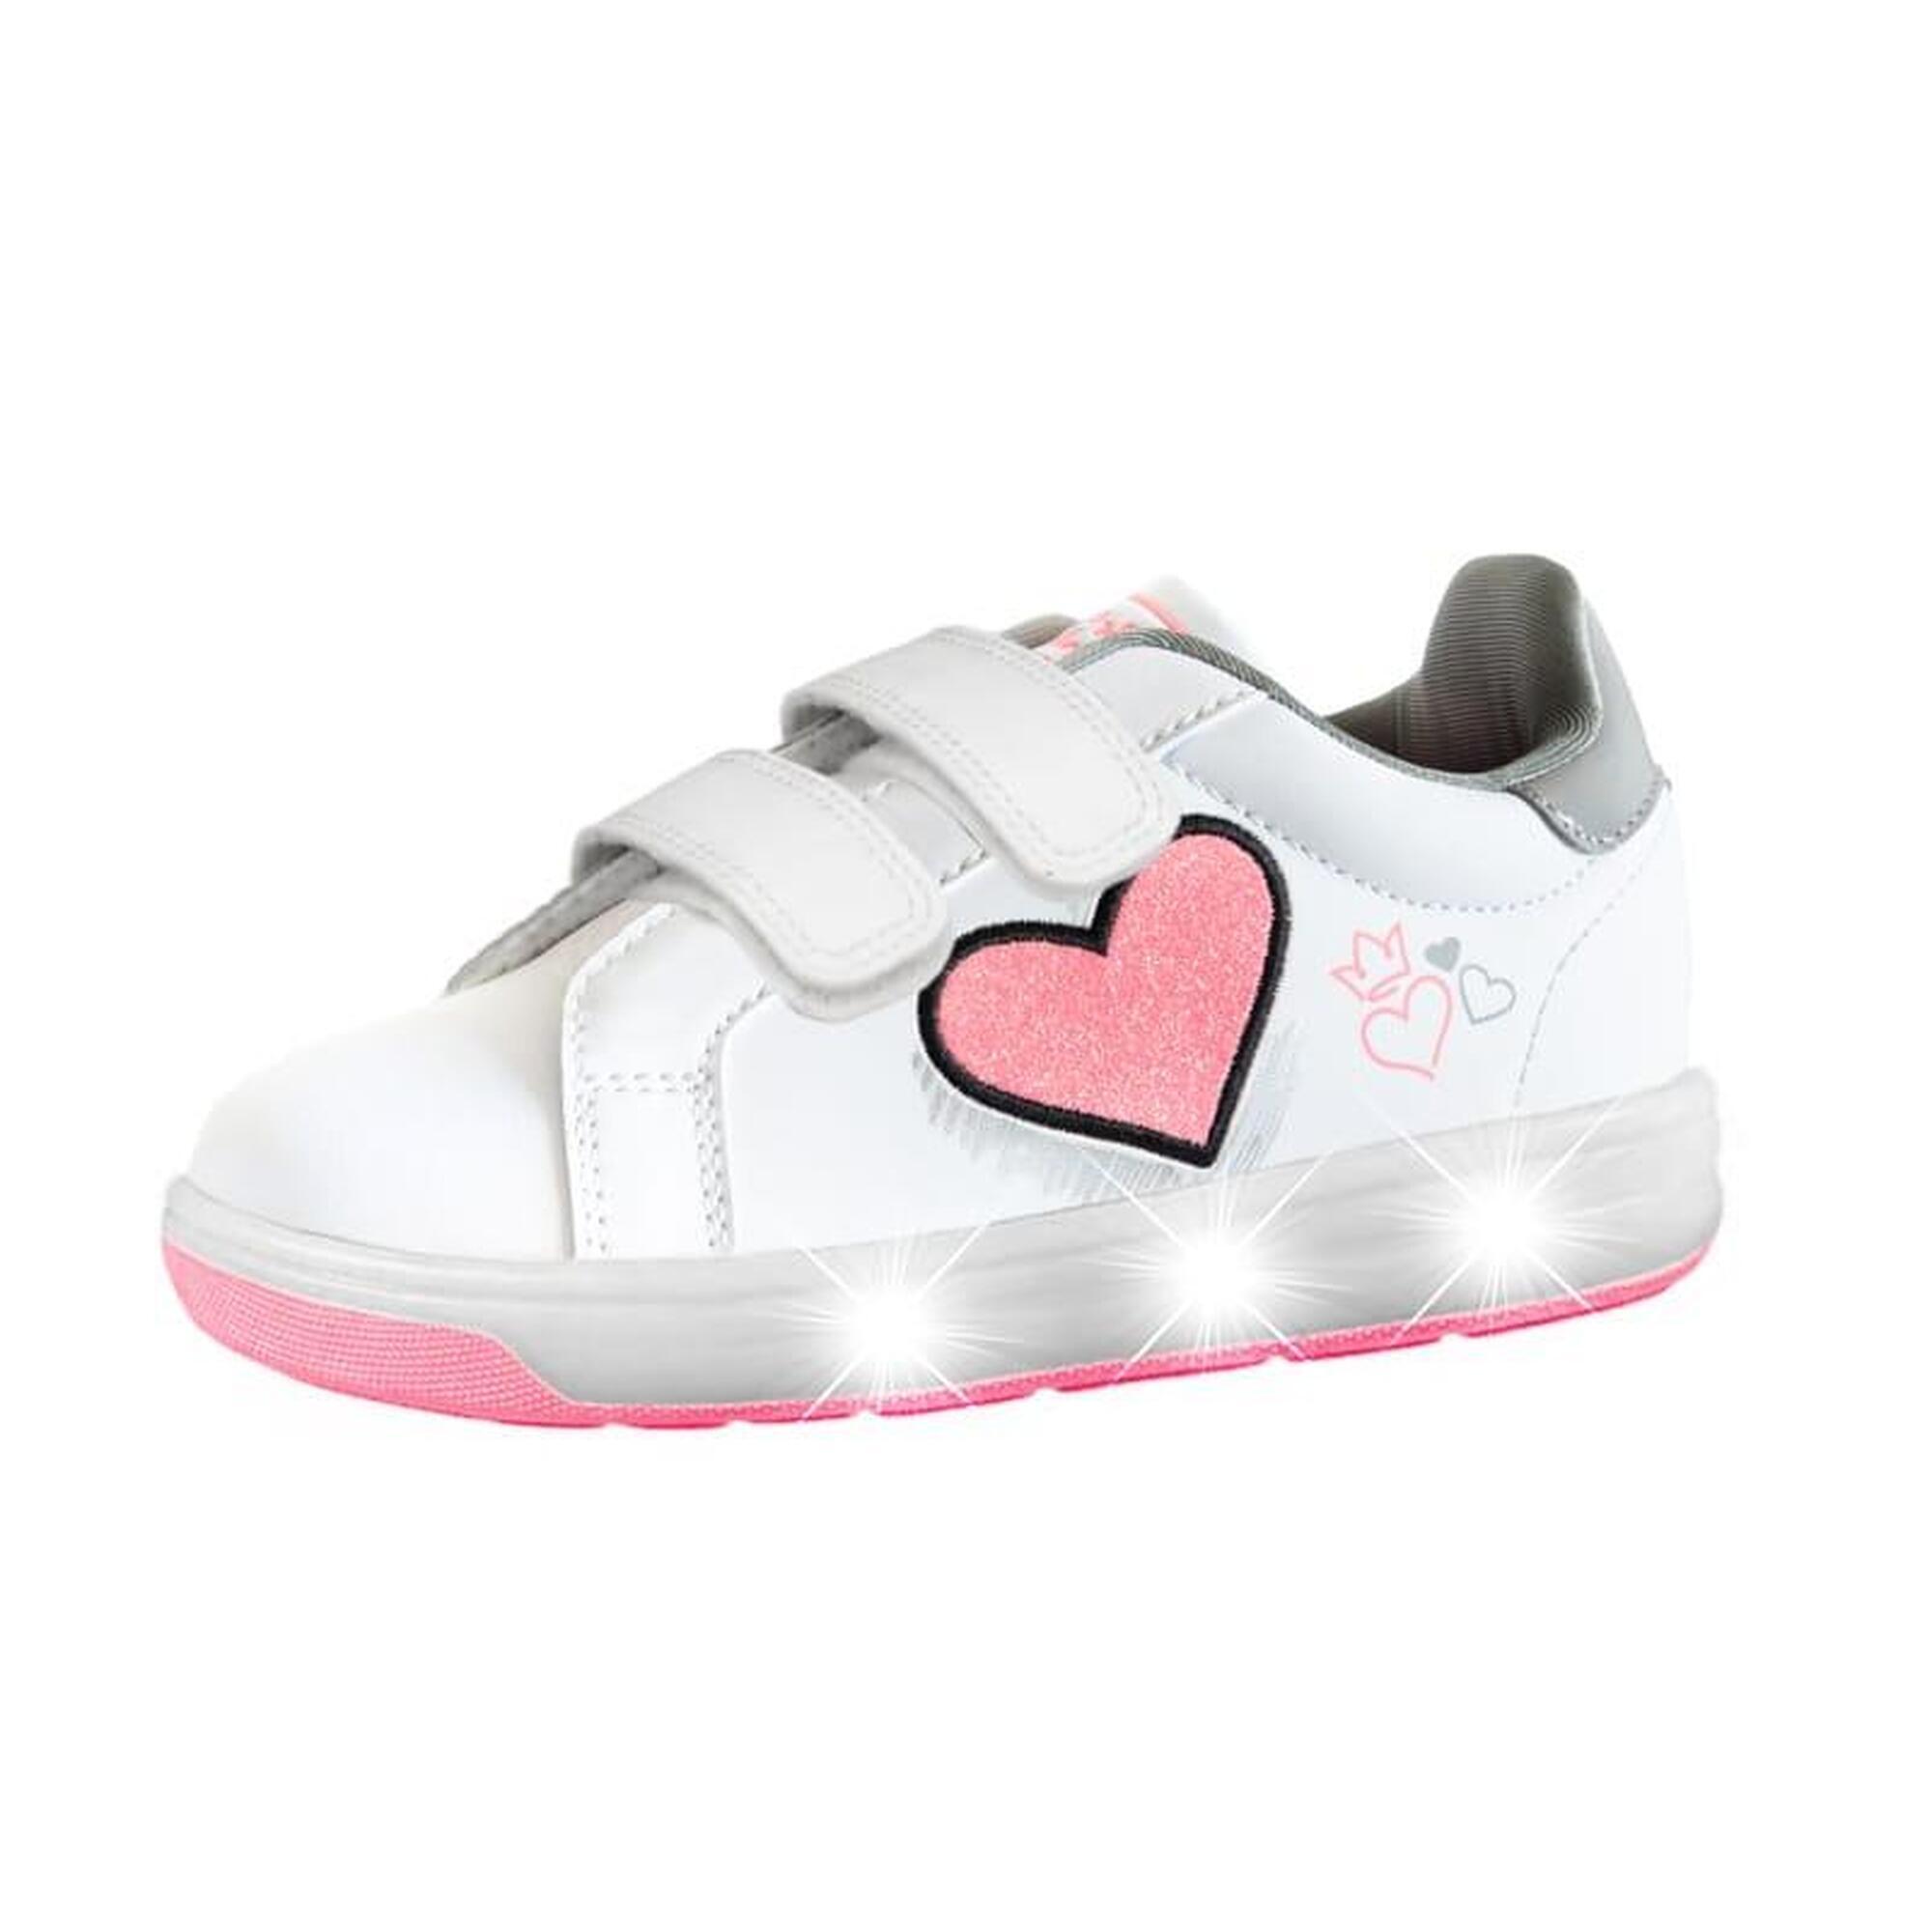 Chaussures à LED BREEZY ROLLERS 2196110 les filles blanc/rose